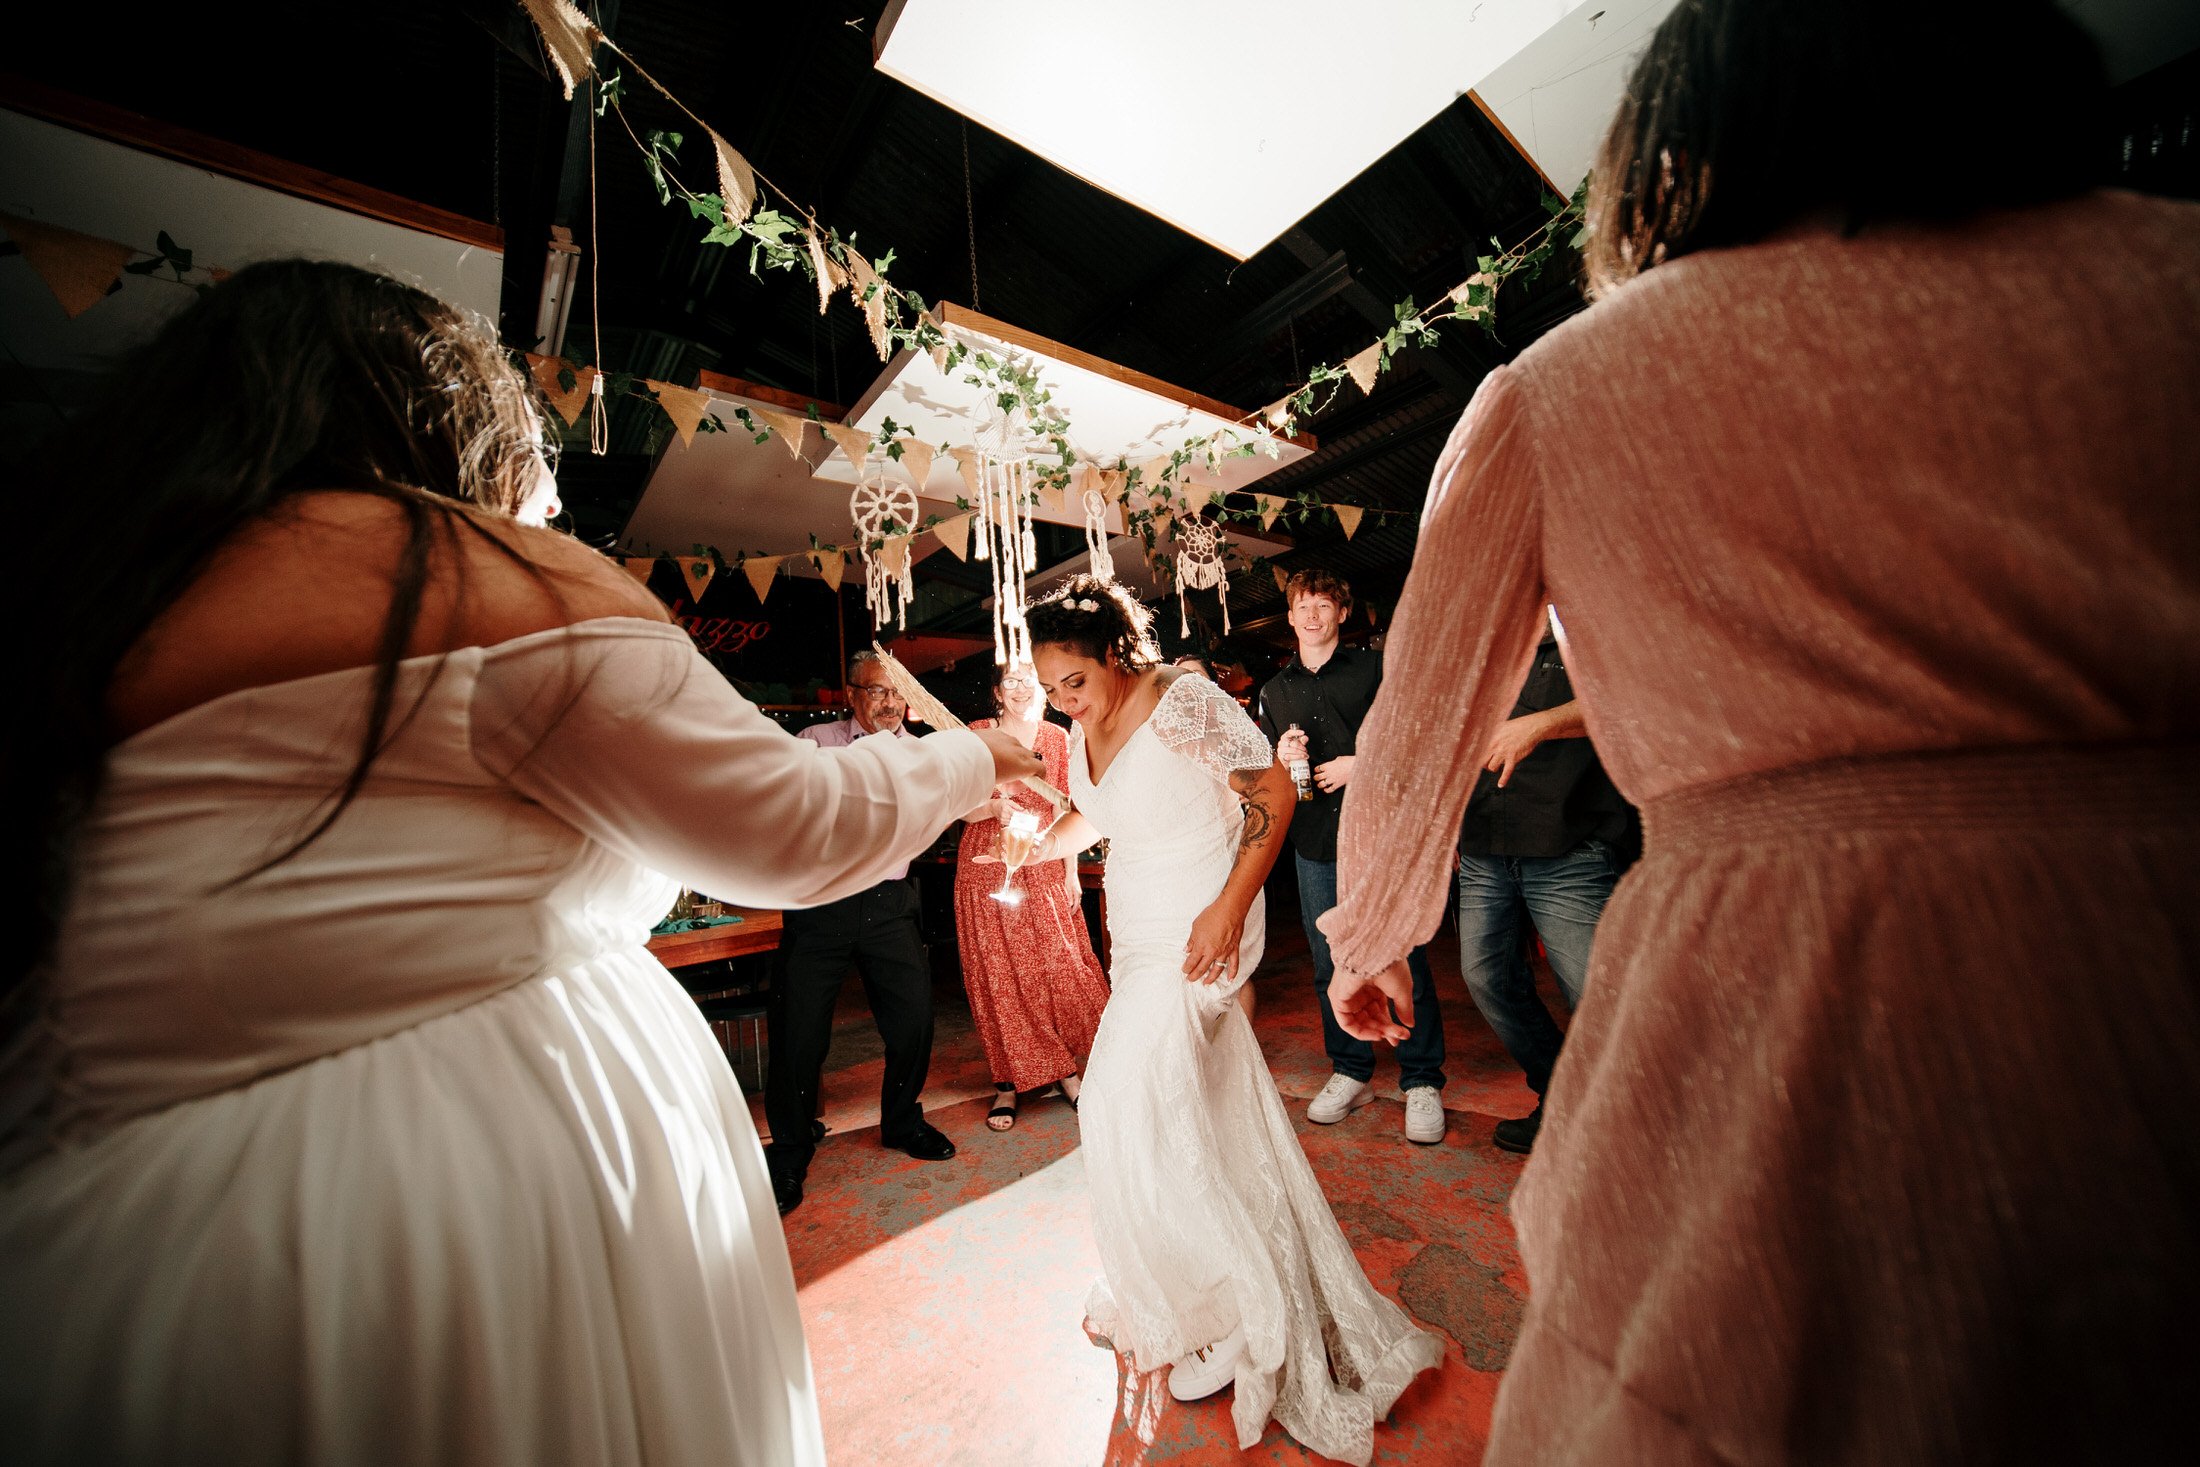 Auckland Wedding Photographer | Auckland Wedding Venue | Garden Wedding Venue | Same Sex Wedding | The Red Shed | Auckland Videographer